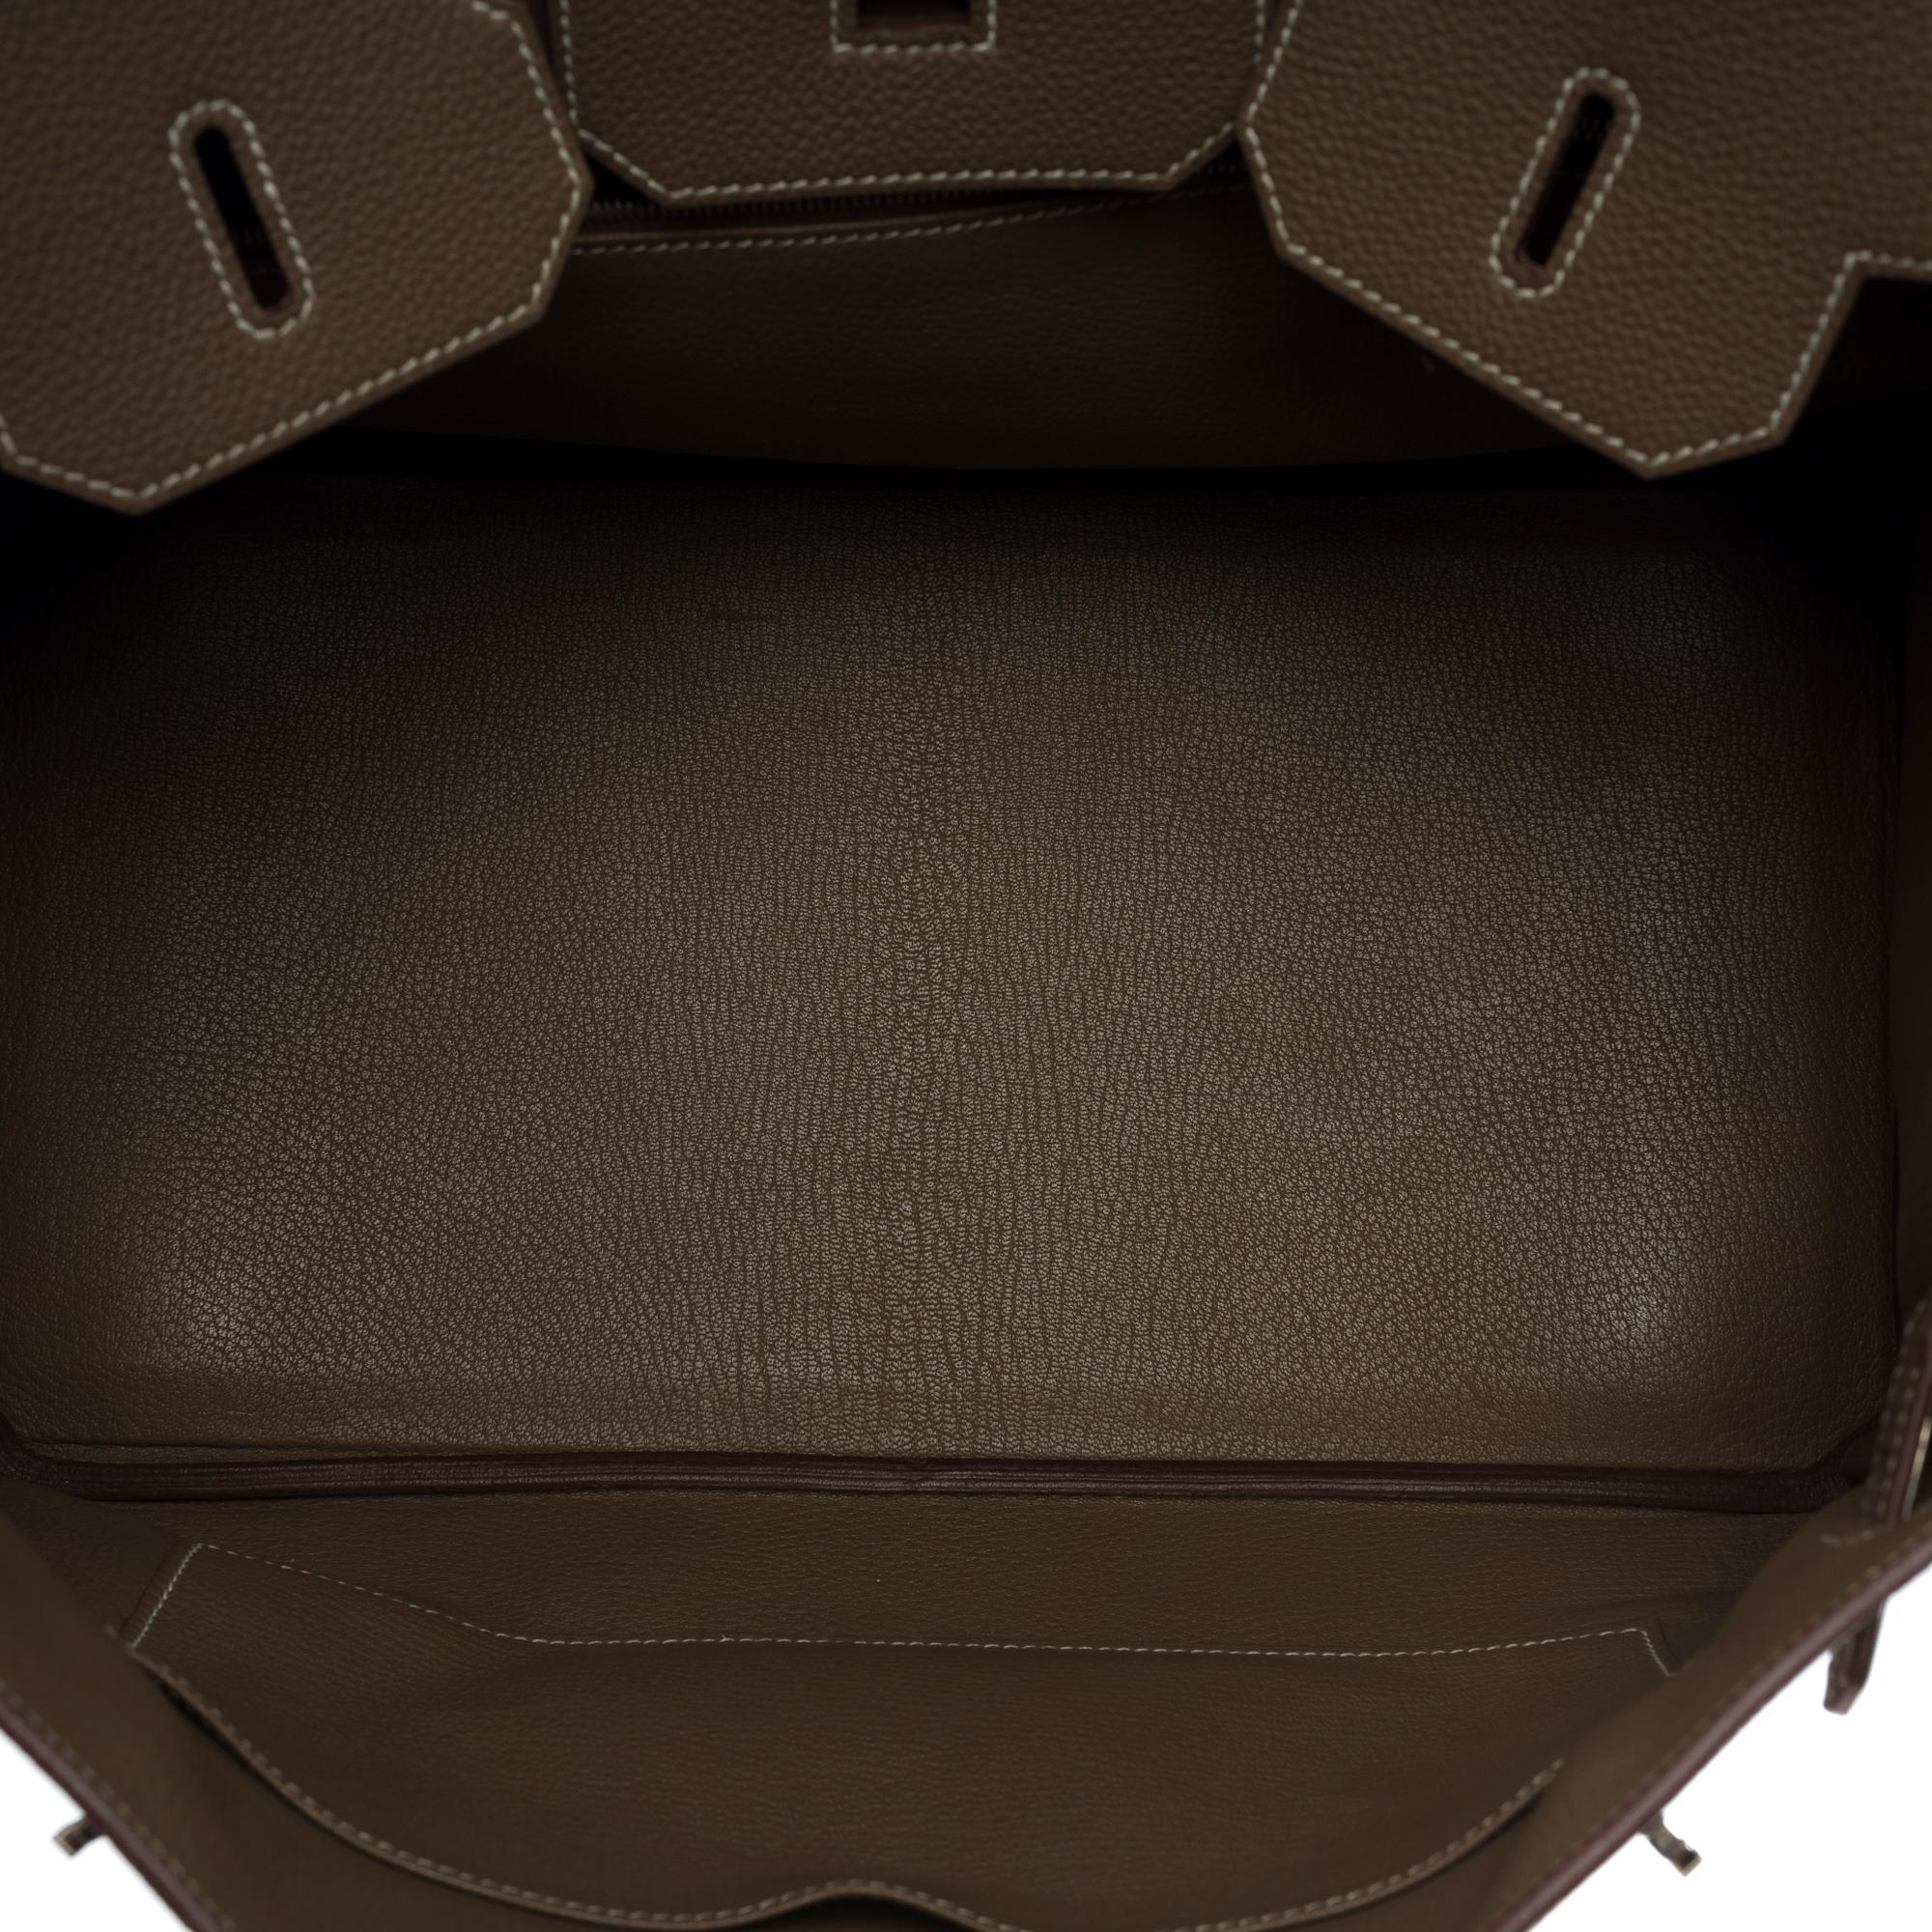 Stunning Hermès Birkin 35 handbag in etoupe Togo leather, SHW 3